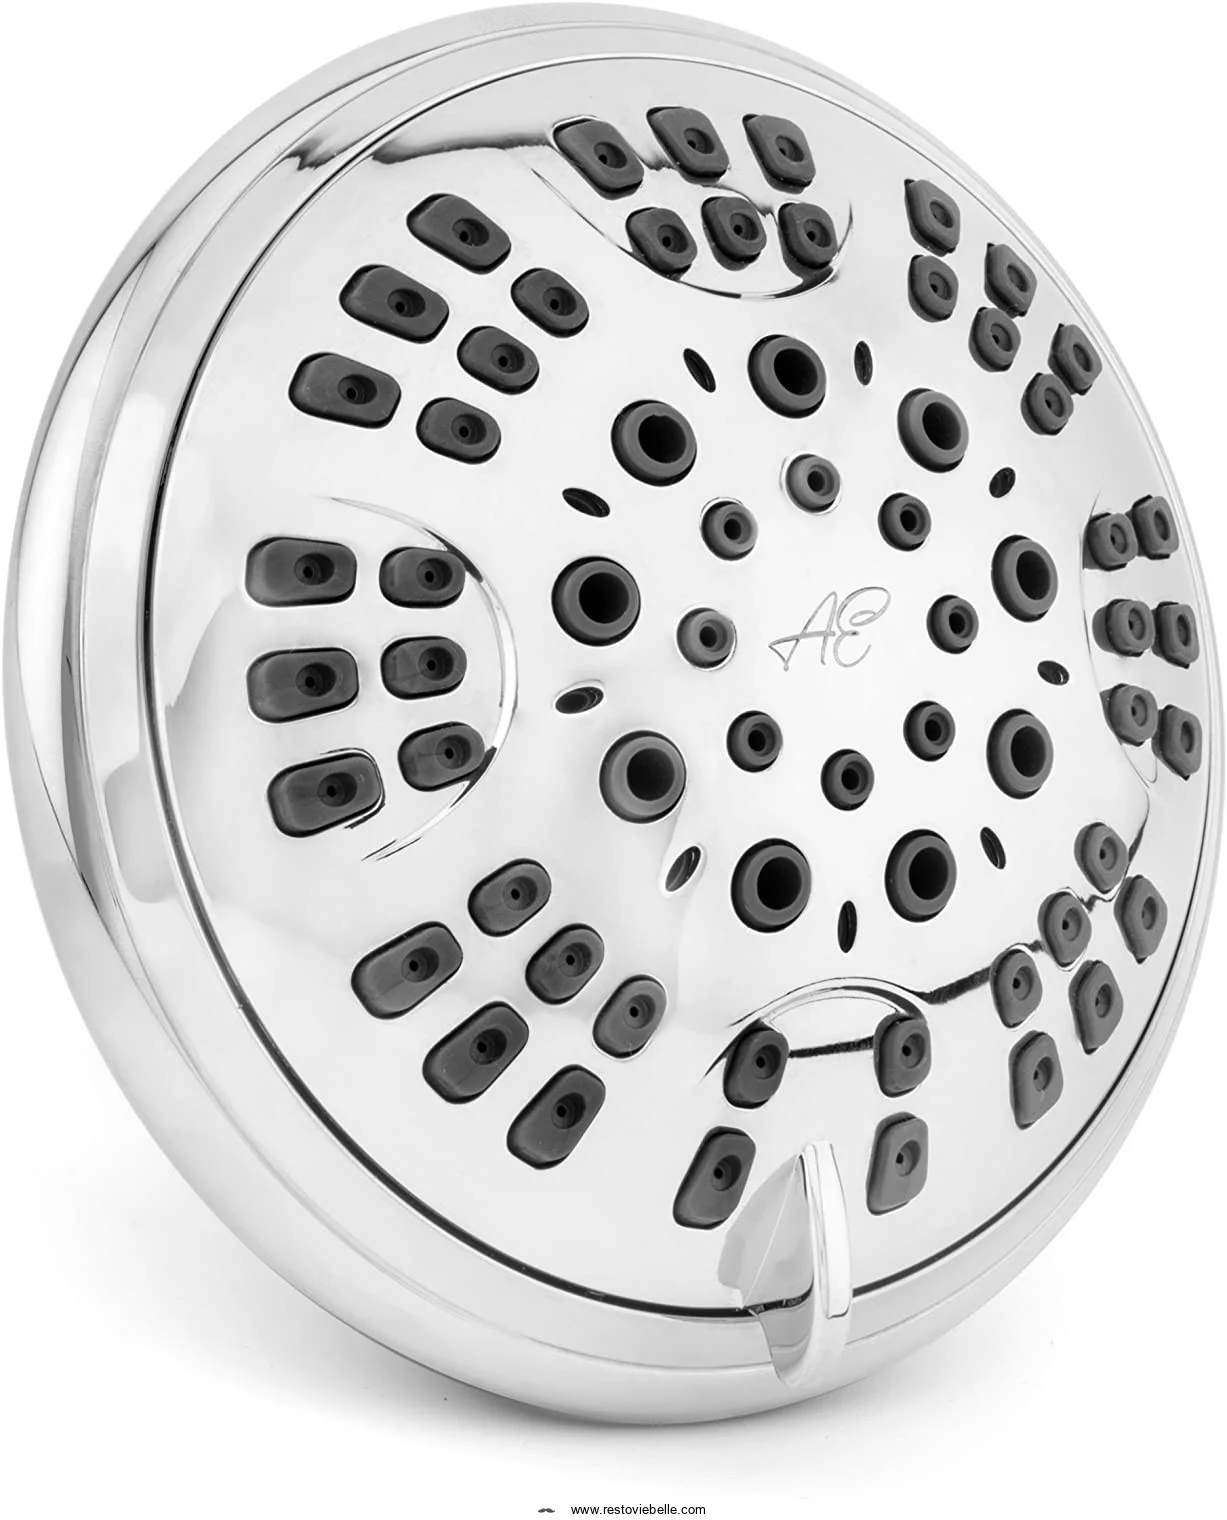 6 Function Adjustable Luxury Shower